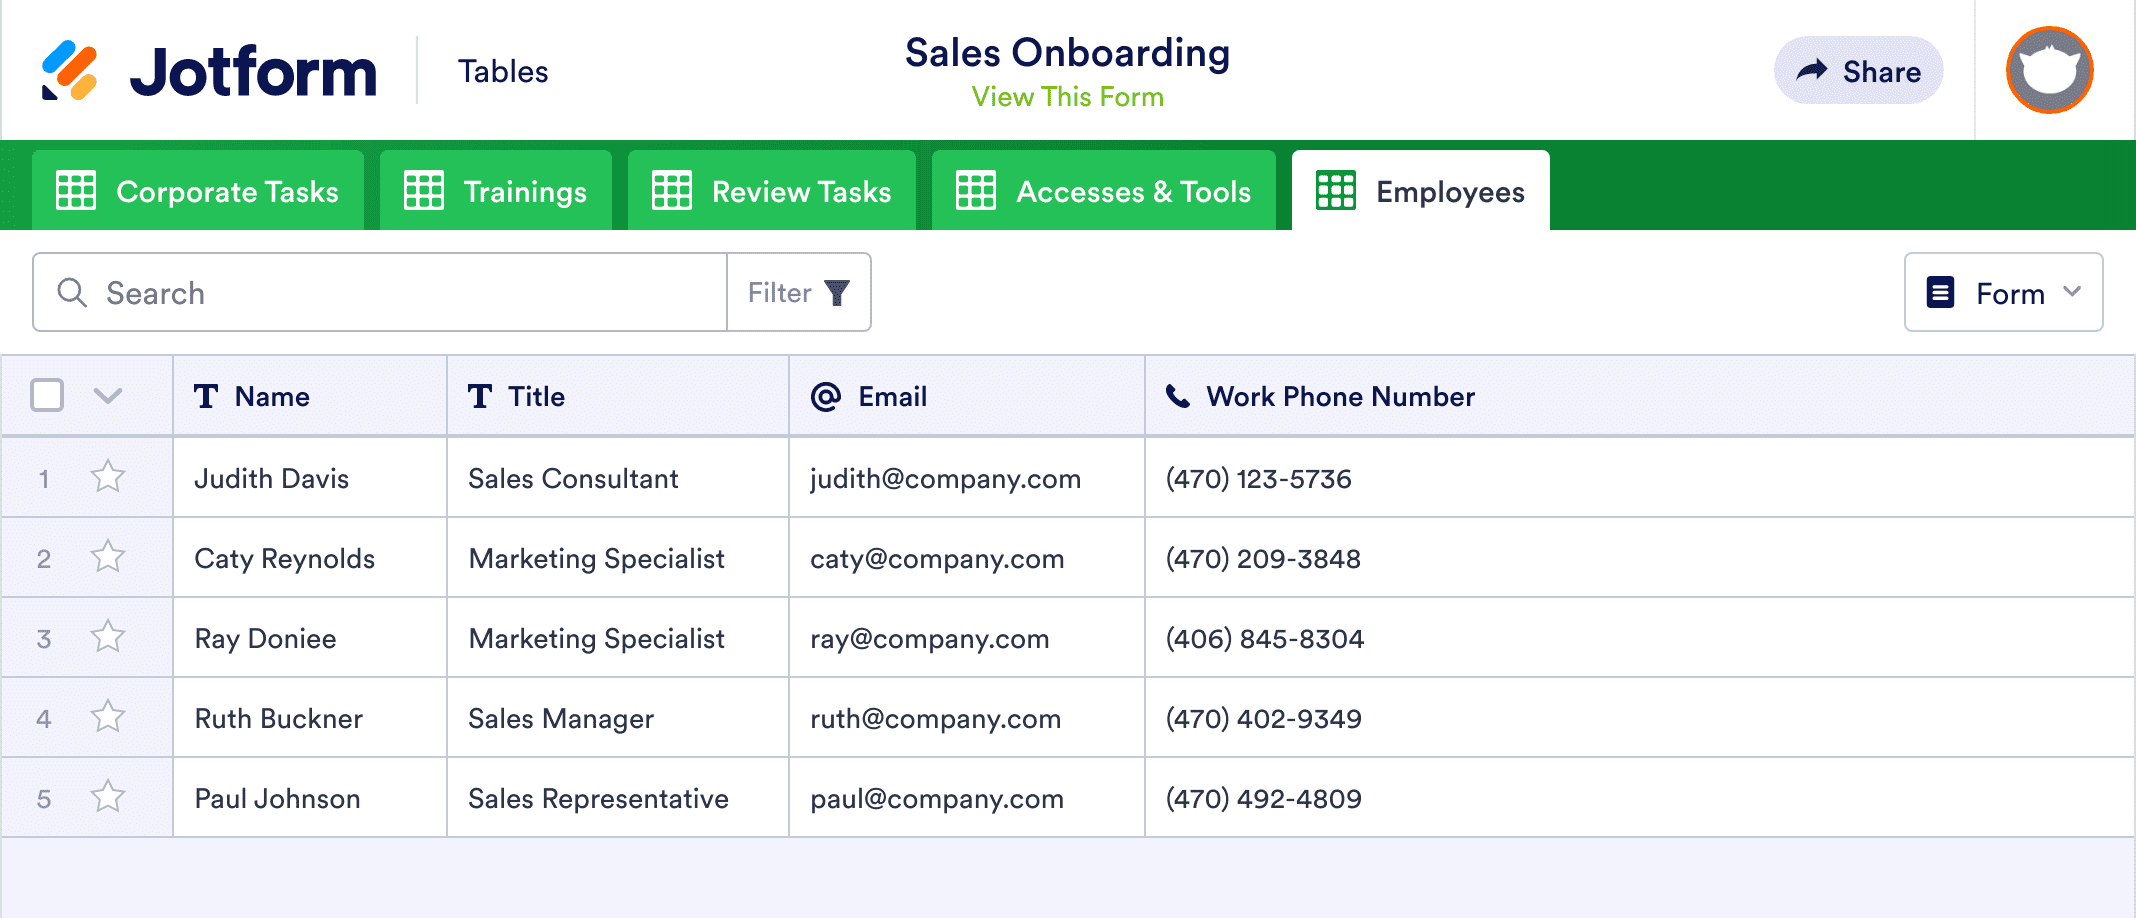 Sales Onboarding